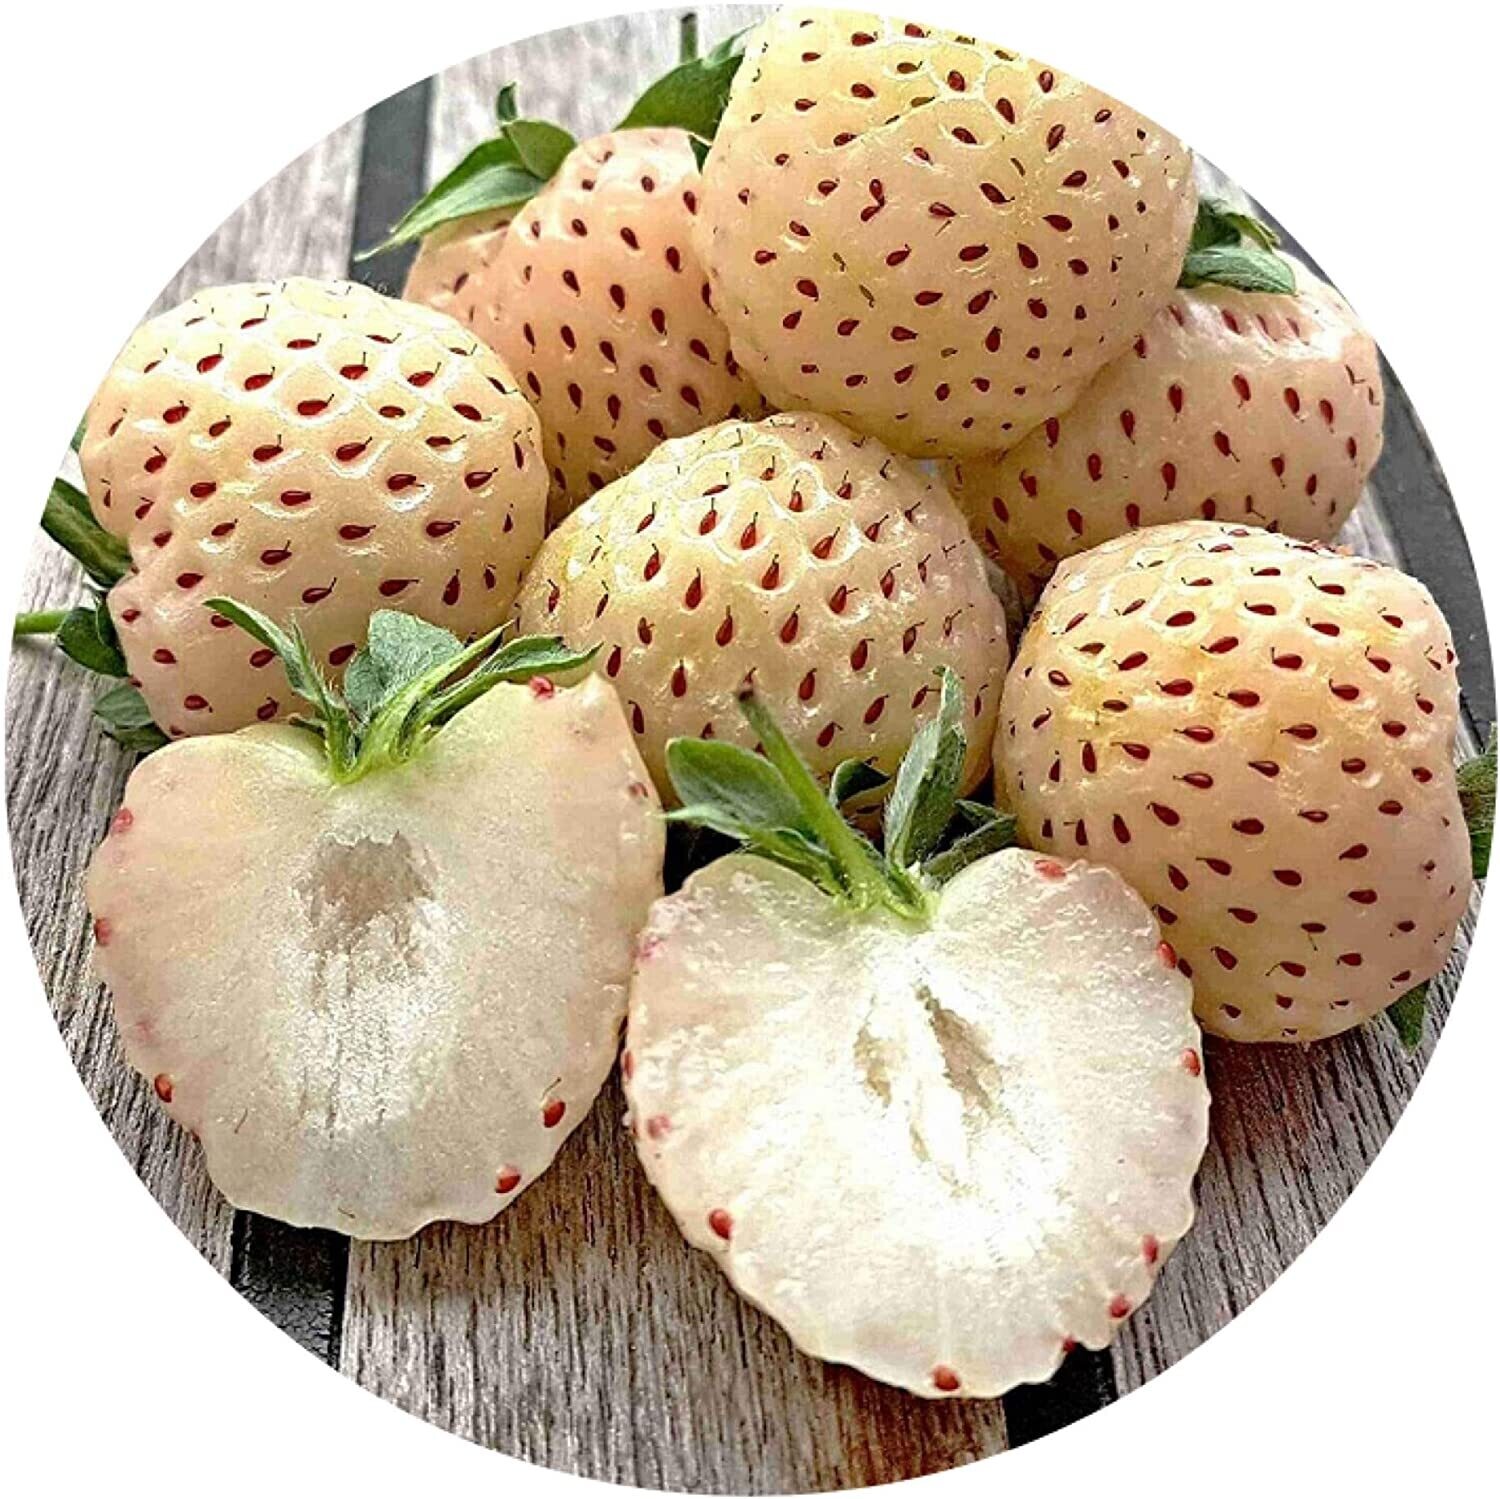 50 Samen weisse Erdbeere/Pineberry/Fragaria x ananassa/Pineapple strawberry/Ananas Erdbeere